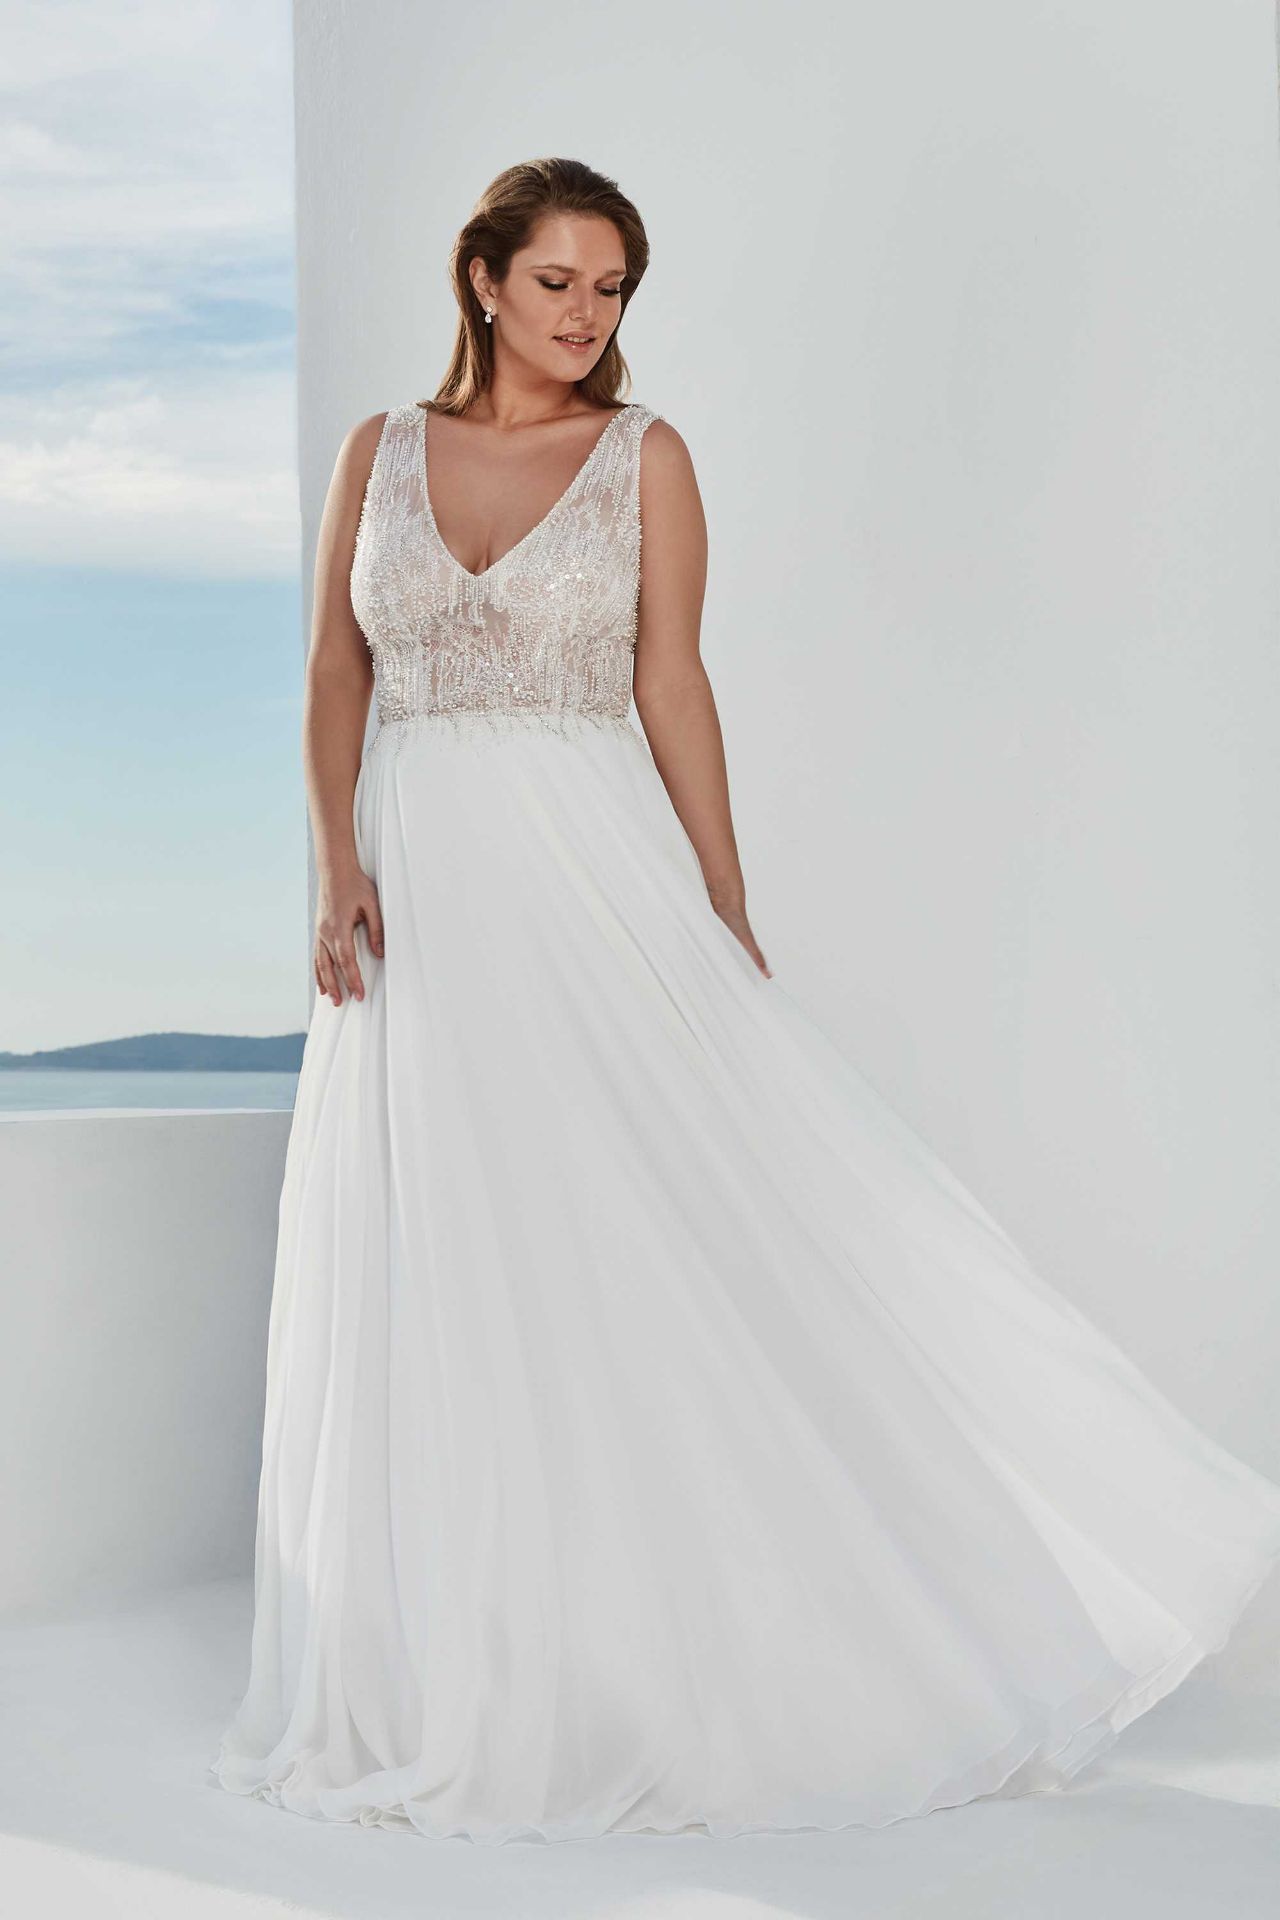 1 x Justin Alexander Designer Wedding Dress With Sheer Beaded Bodice - UK Size 10 - RRP £1,390 - Image 2 of 11